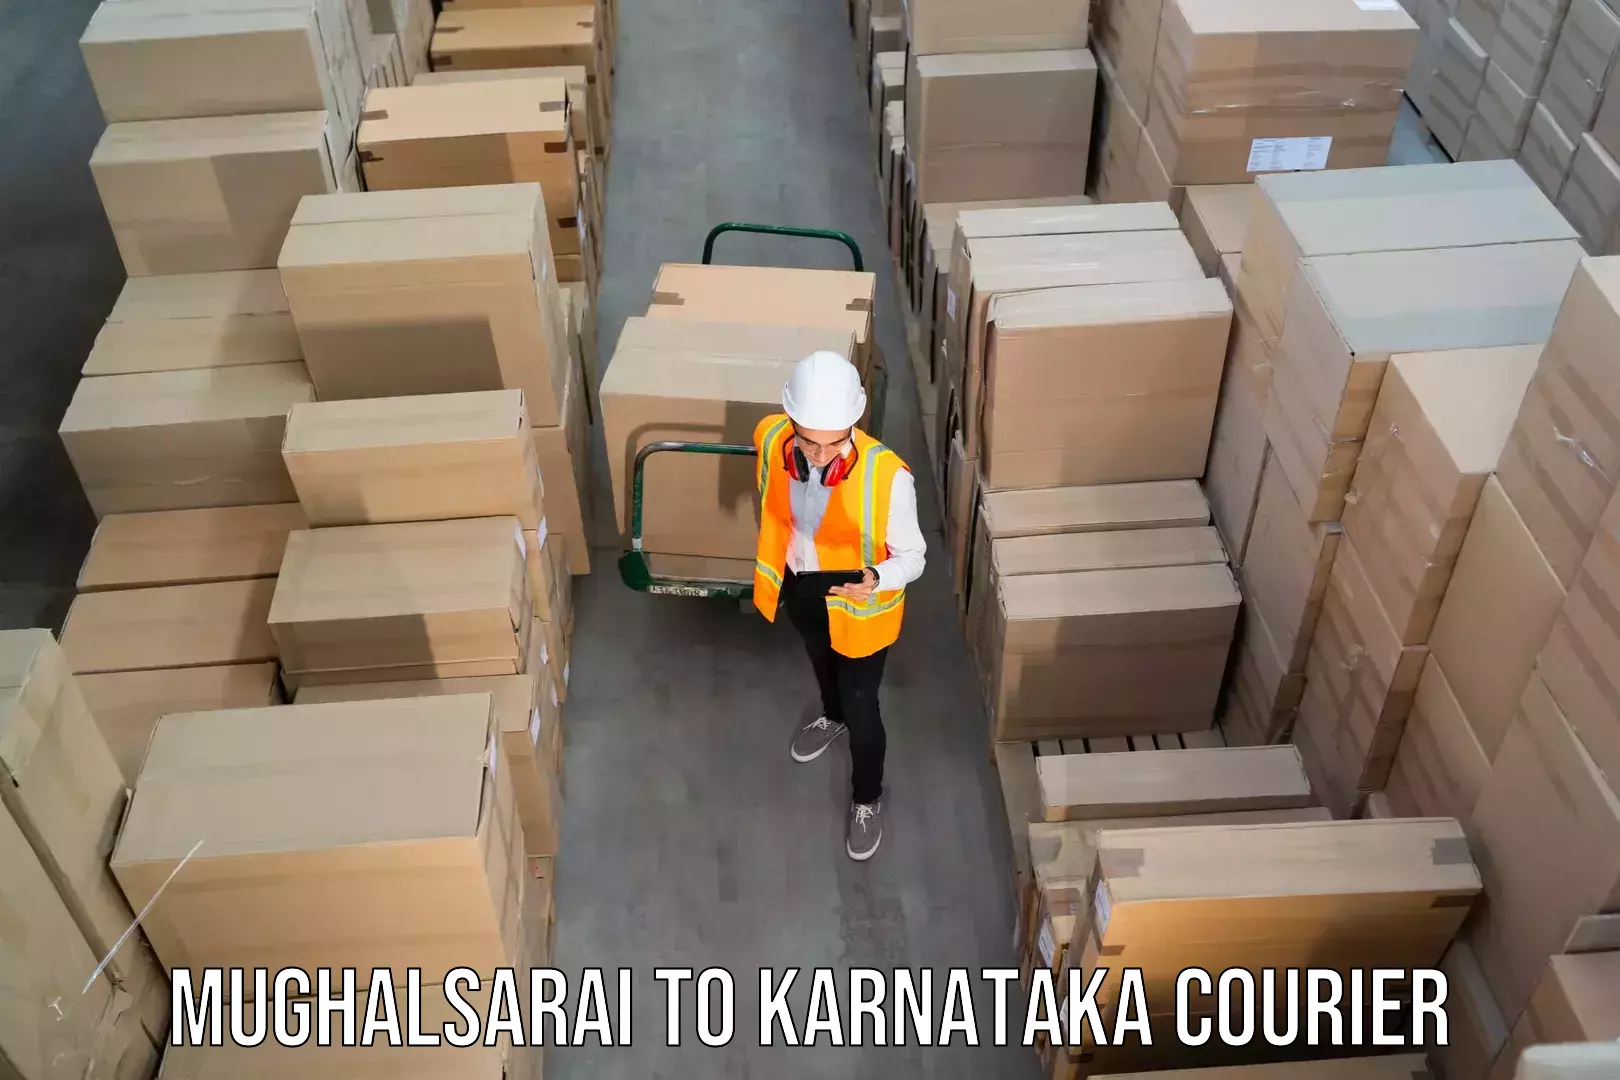 Weekend courier service Mughalsarai to Karnataka